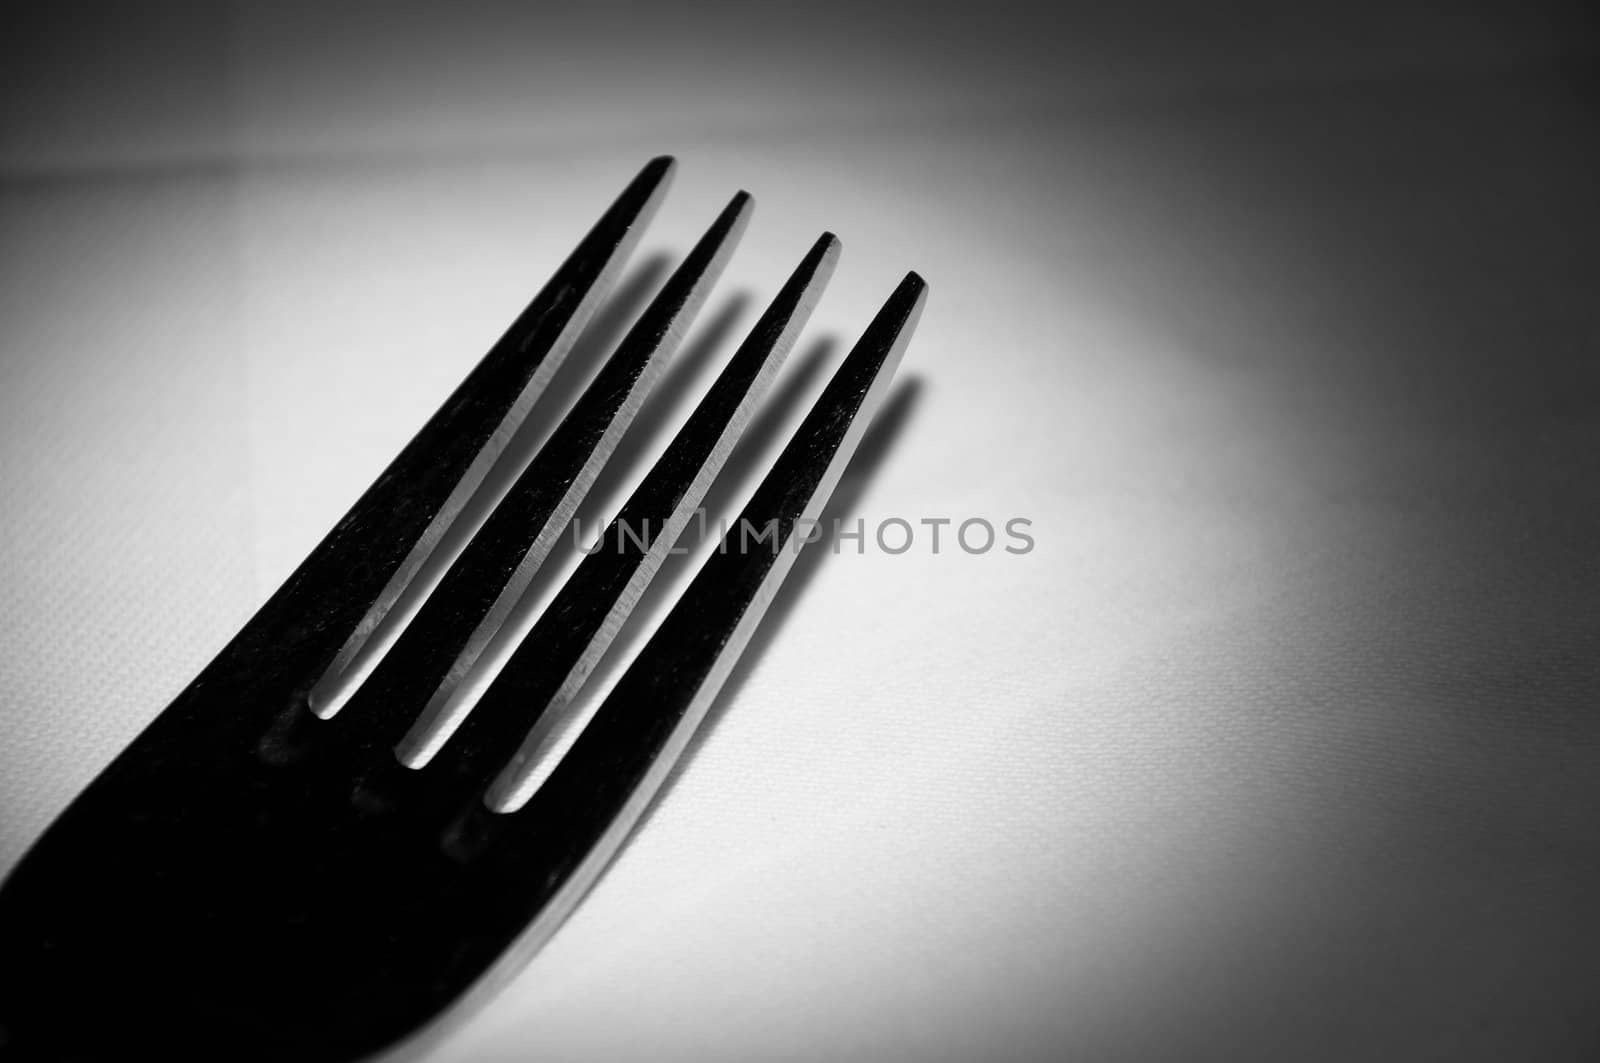 Single fork - black and white image